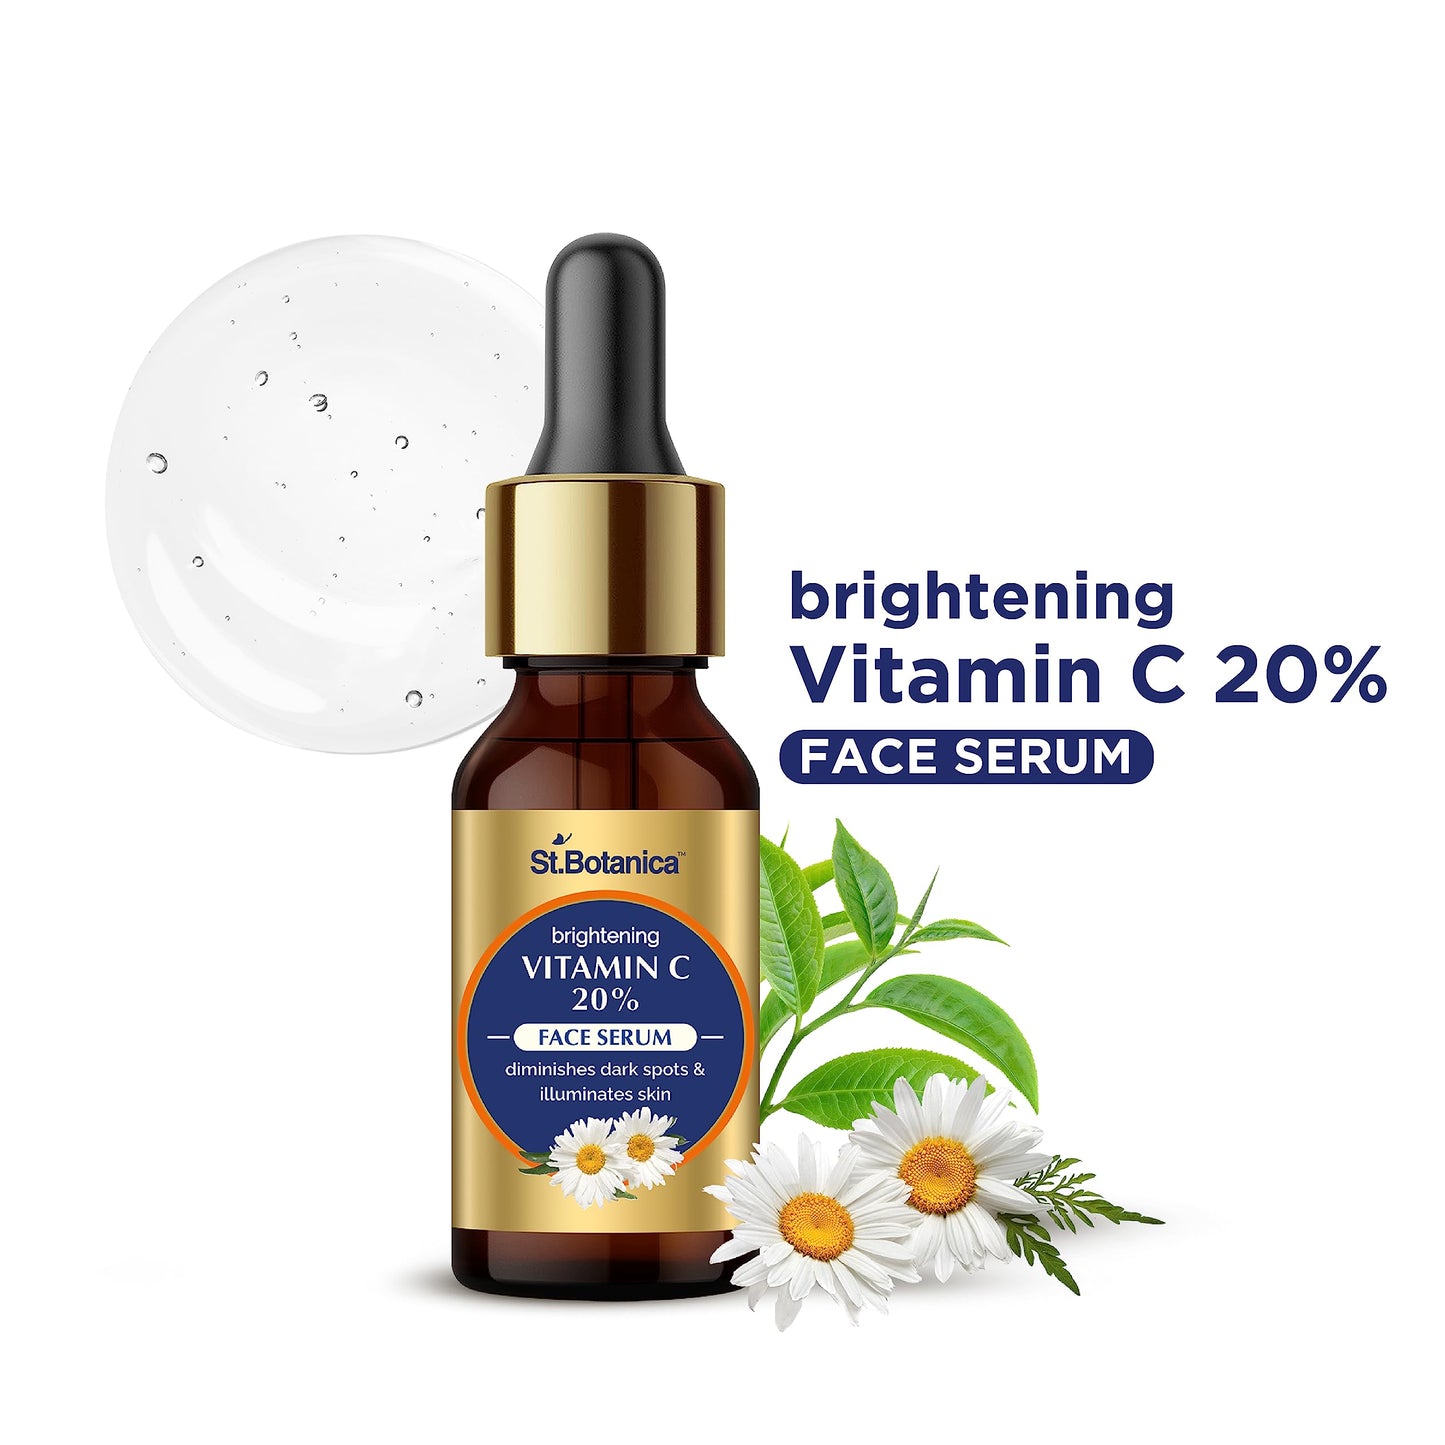 St.Botanica Brightening Vitamin C 20% Face Serum, 10ml | For Illuminating Skin | No Parabens & Sulphates